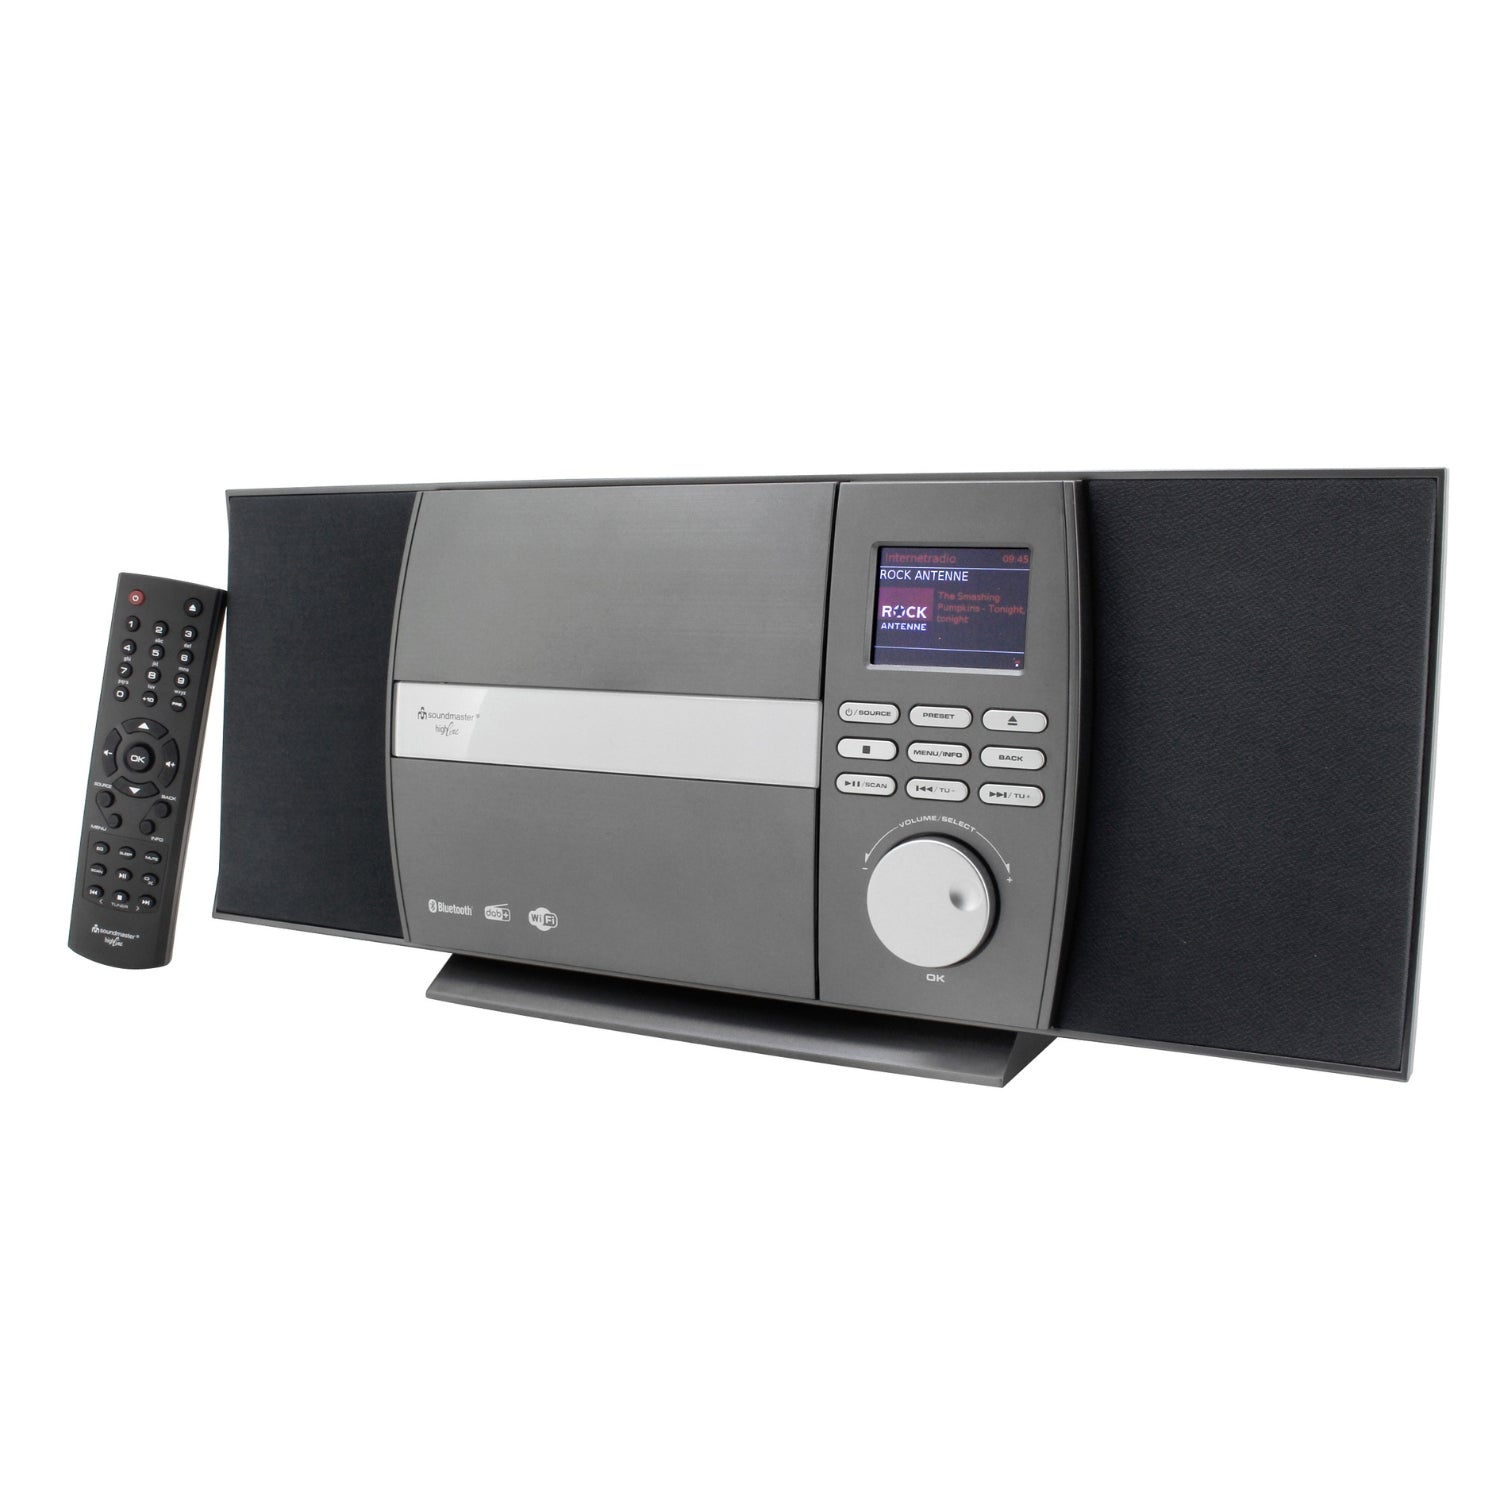 Soundmaster HighLine ICD1010AN stereo system Internet radio WLAN DAB+ Bluetooth UNDOK app control